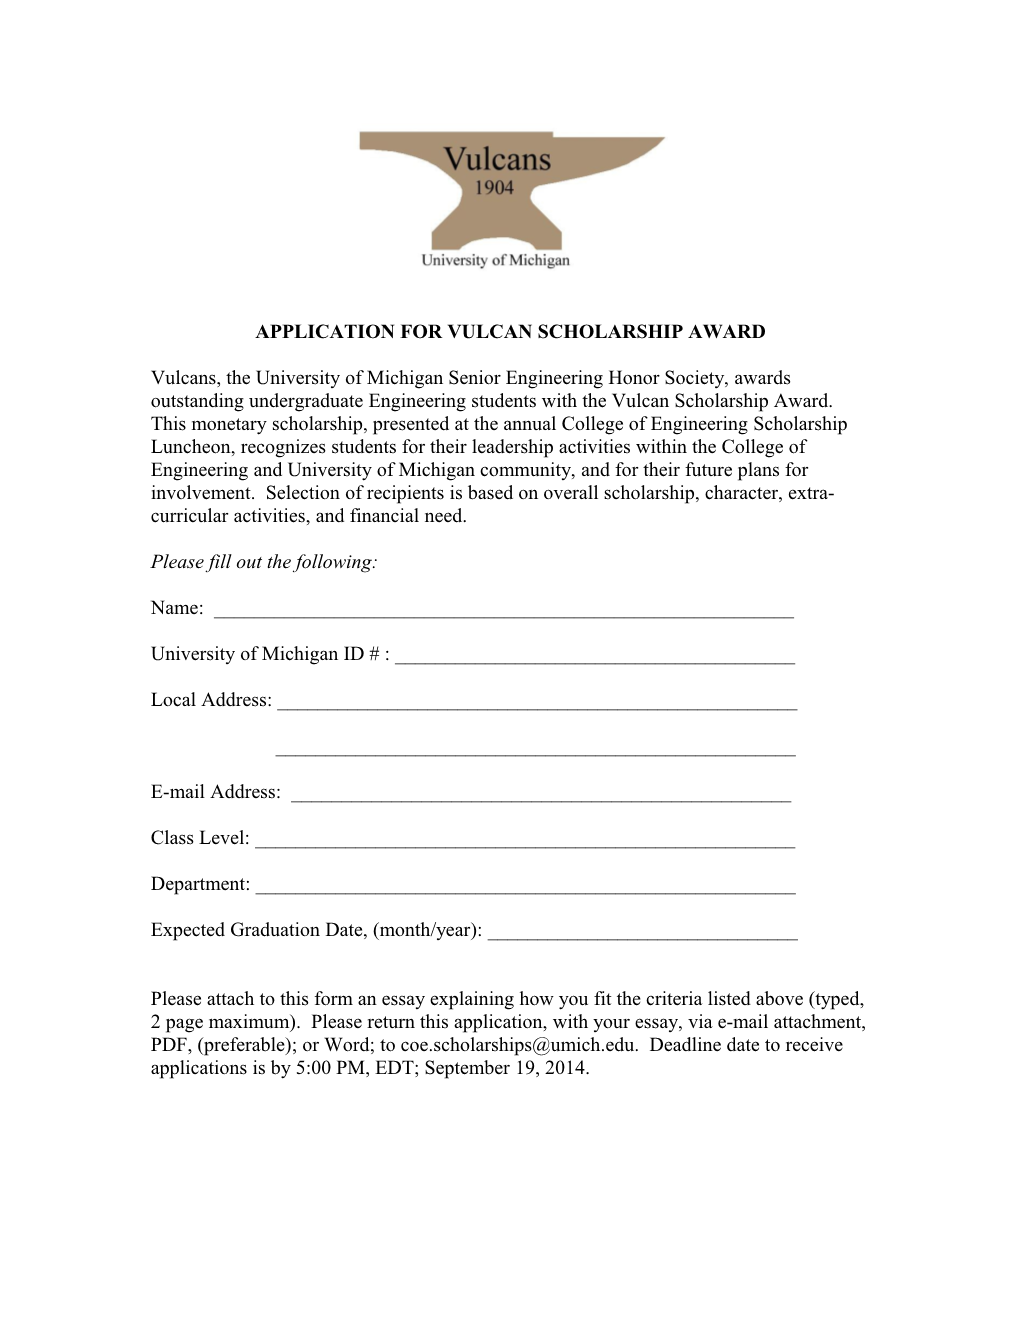 Application for Vulcan Scholarship Award